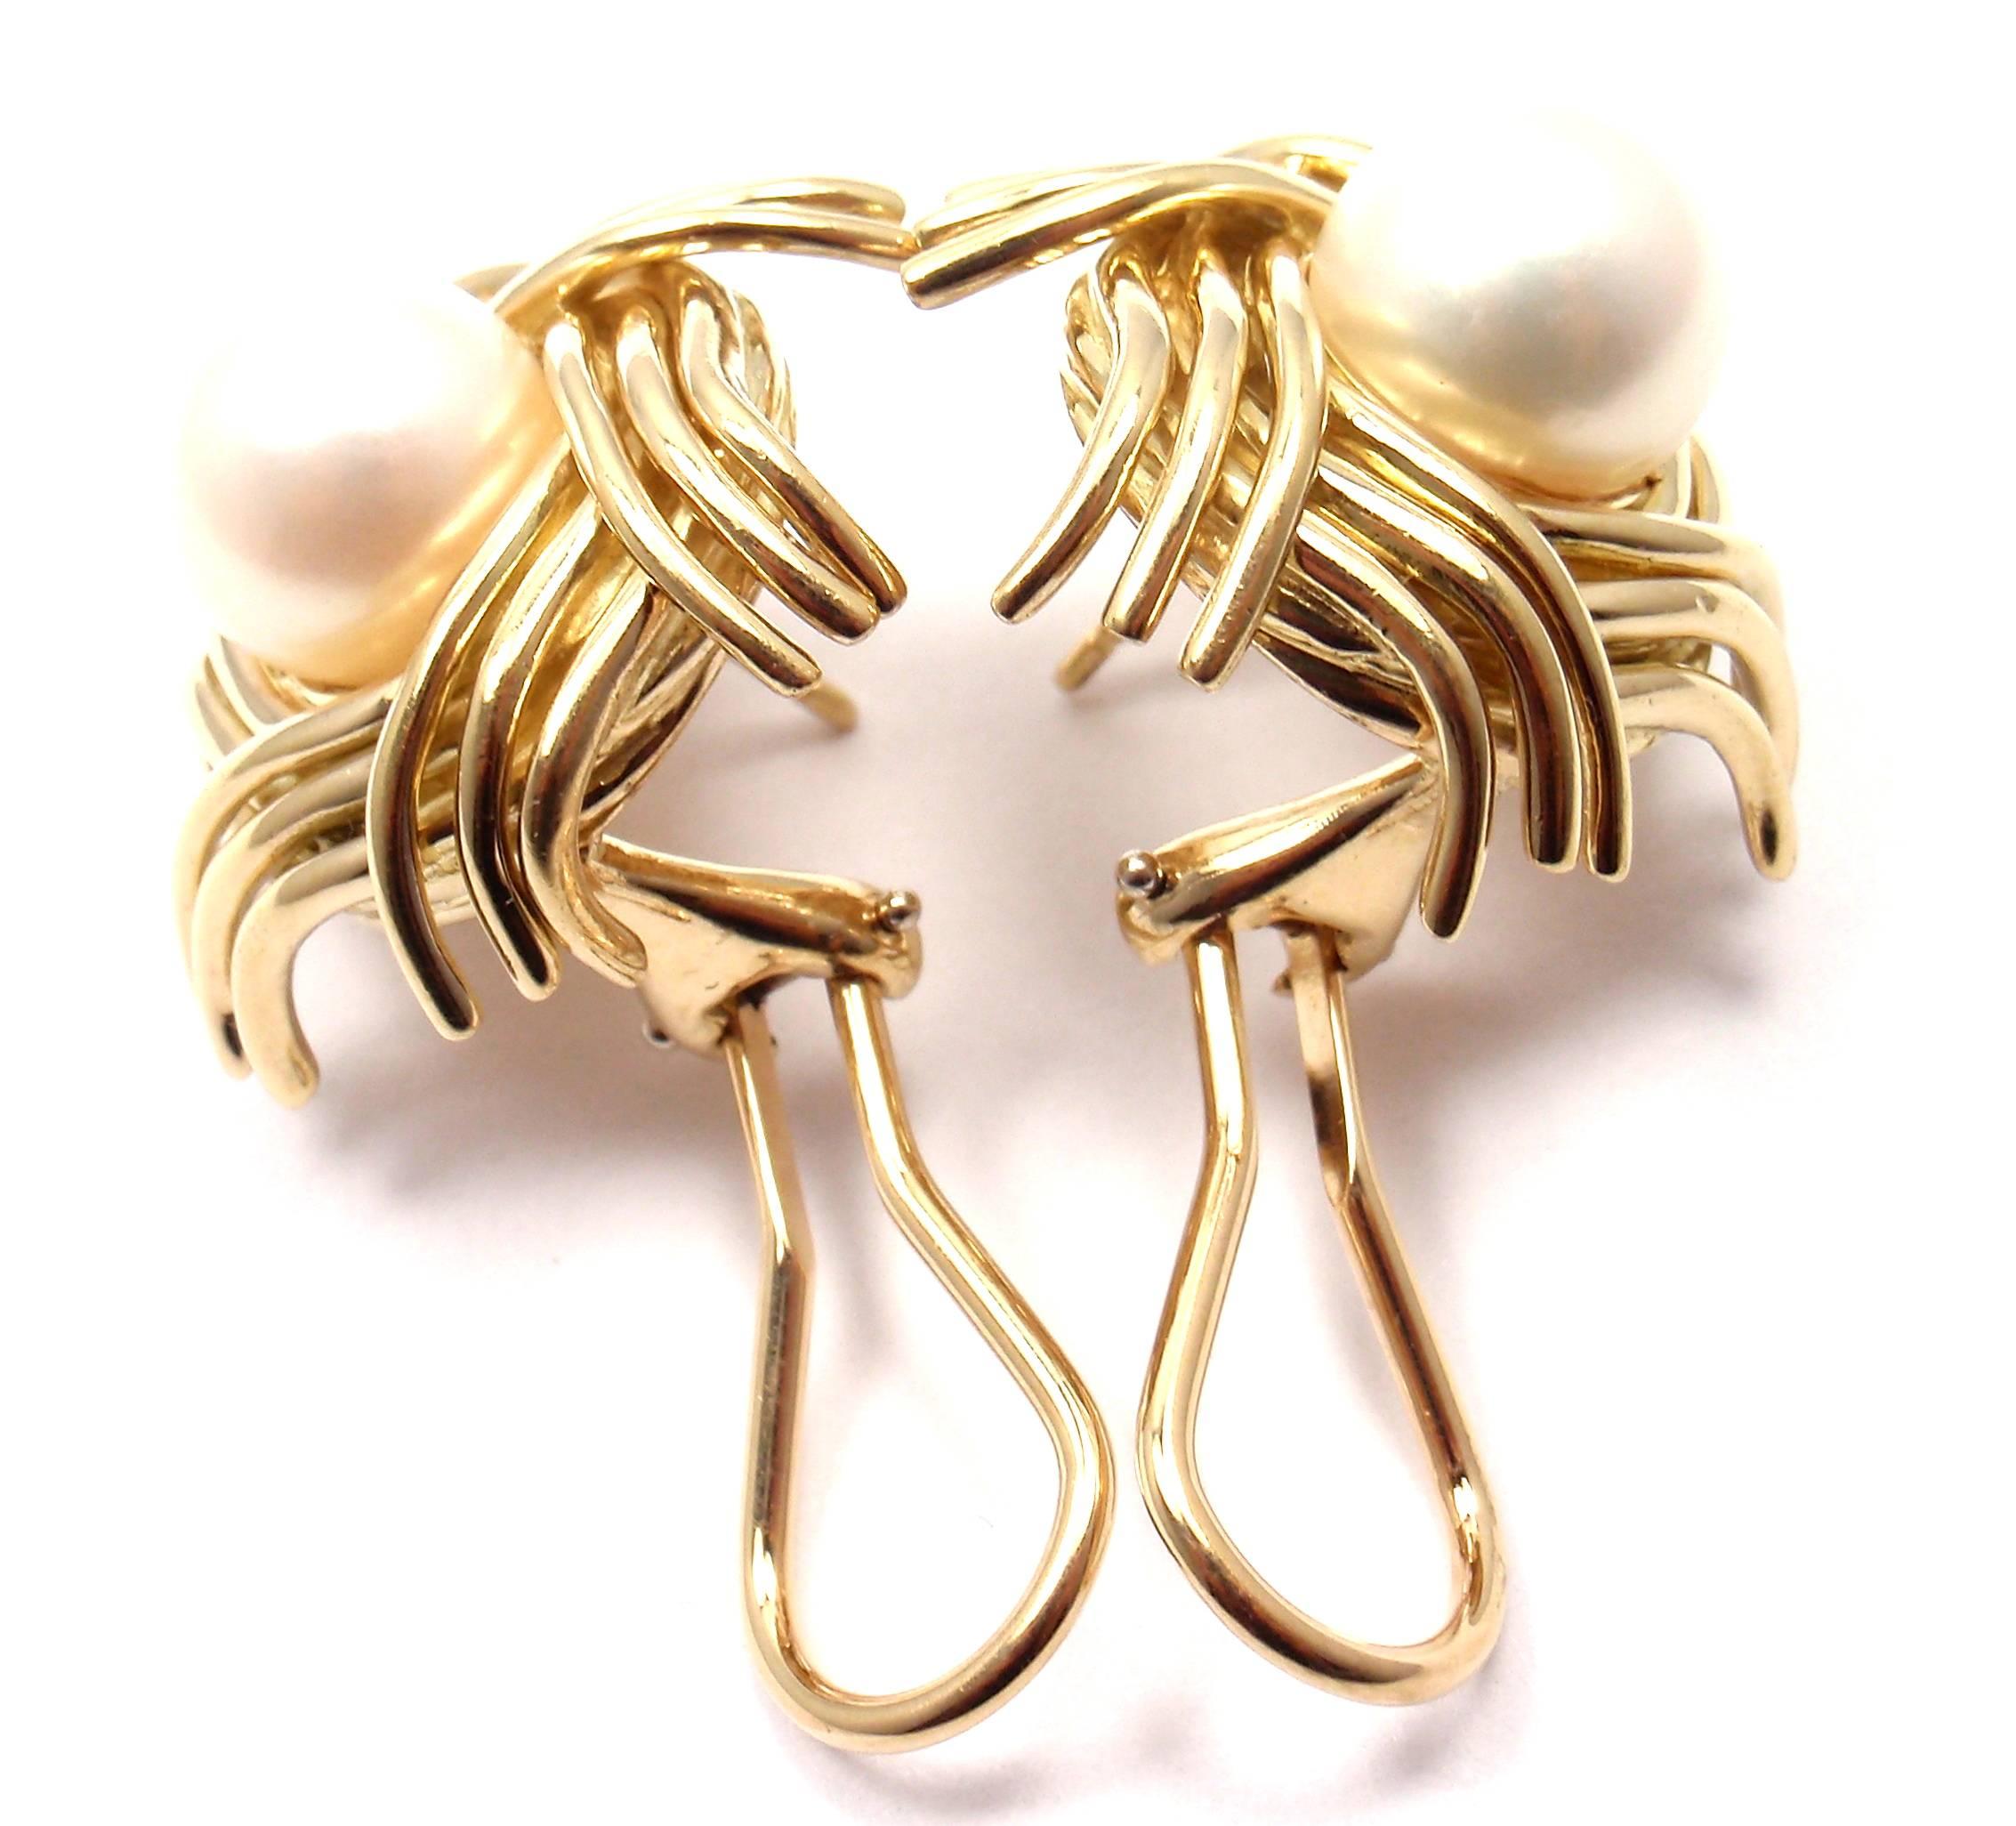 Tiffany & Co. Jean Schlumberger Pearl Yellow Gold Earrings 1